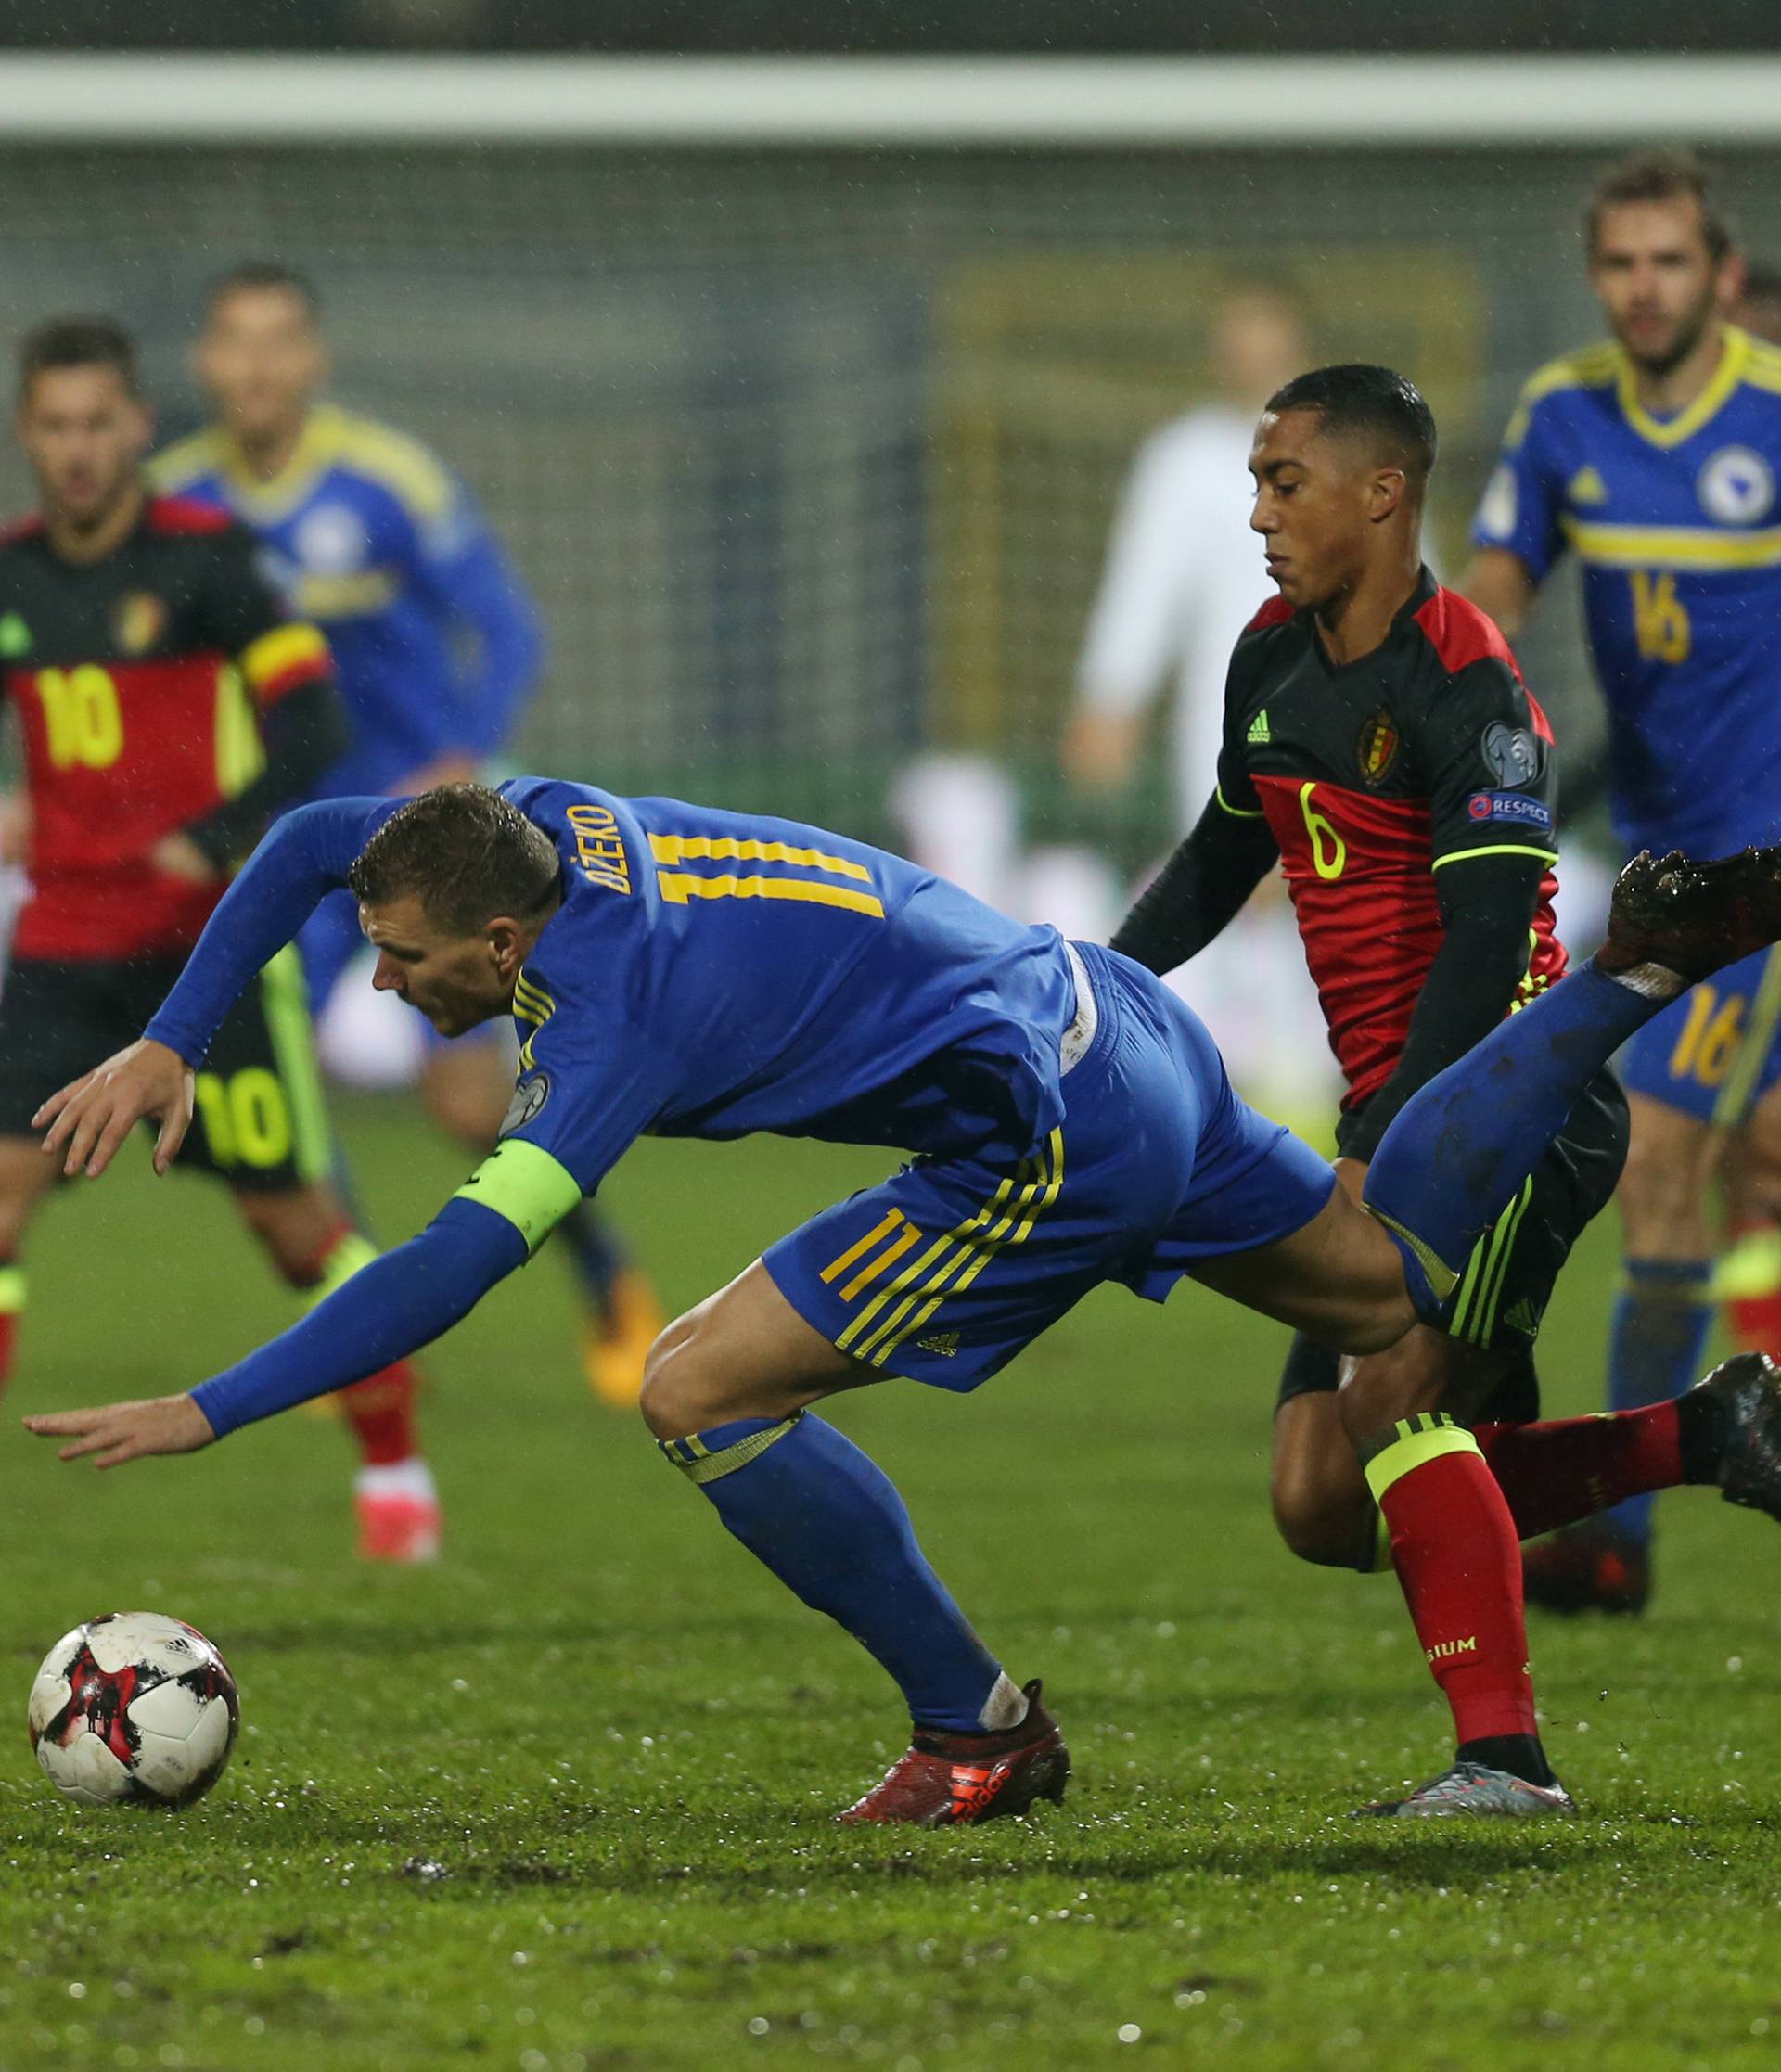 2018 World Cup Qualifications - Europe - Bosnia and Herzegovina vs Belgium